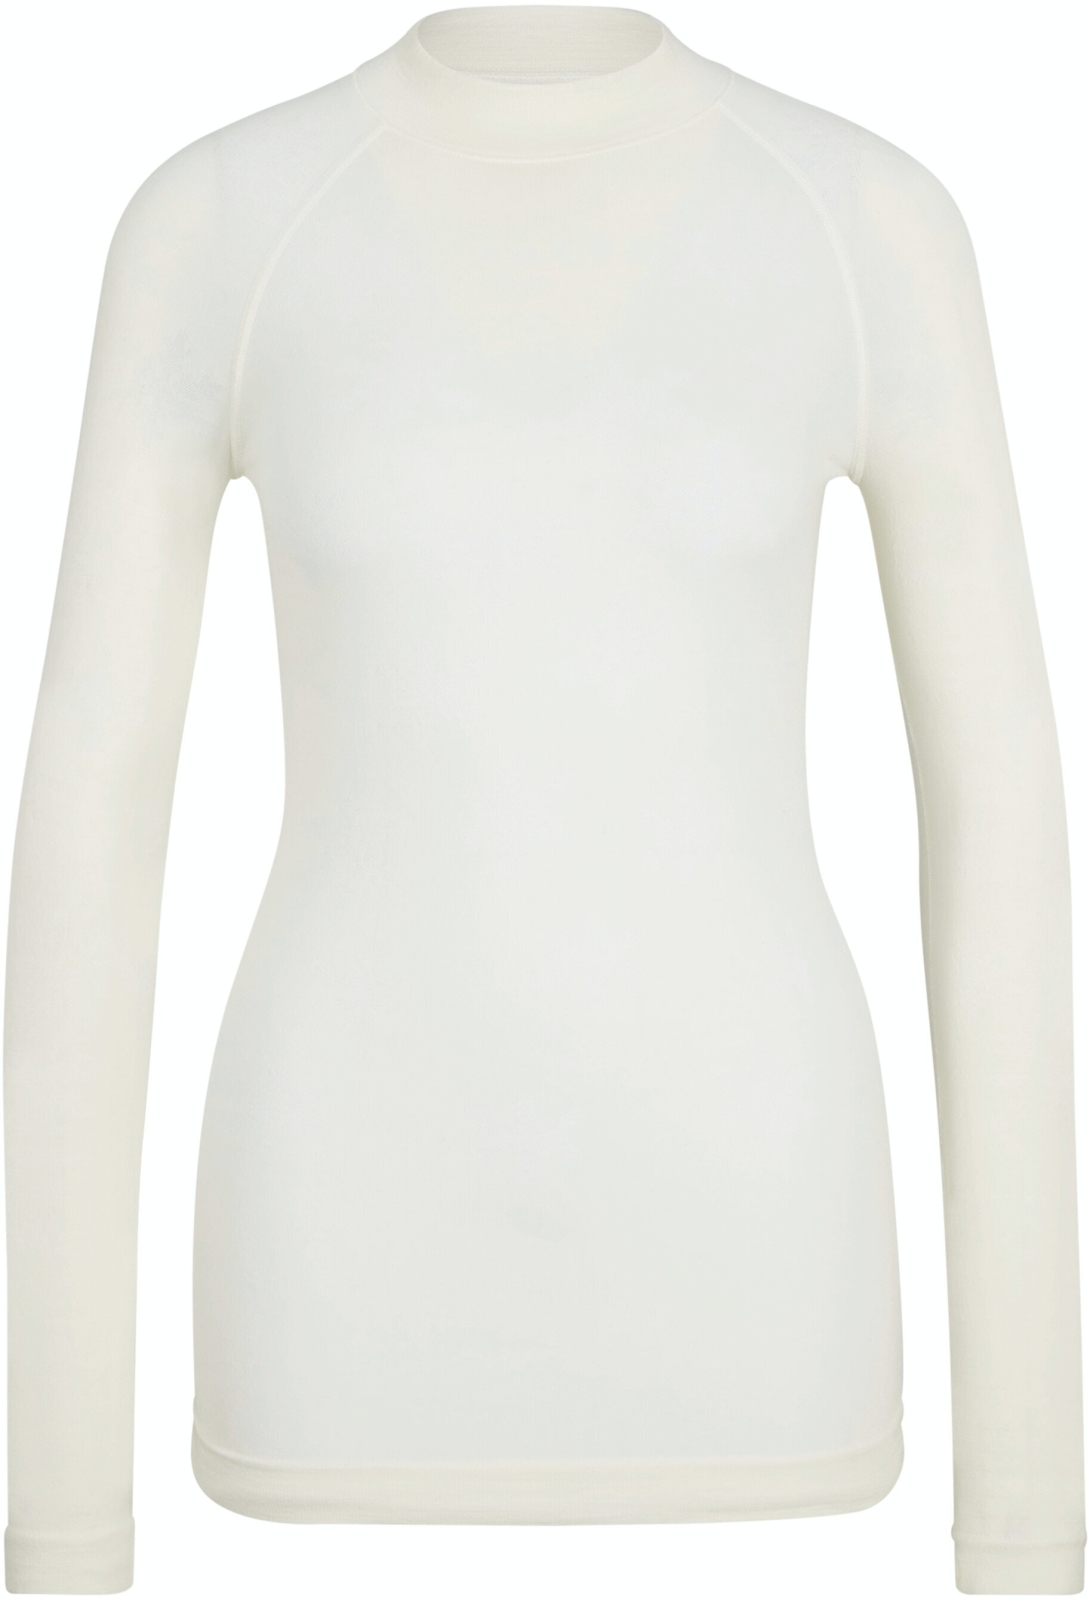 E-shop Falke Women long sleeve Shirt Wool-Tech - off-white L